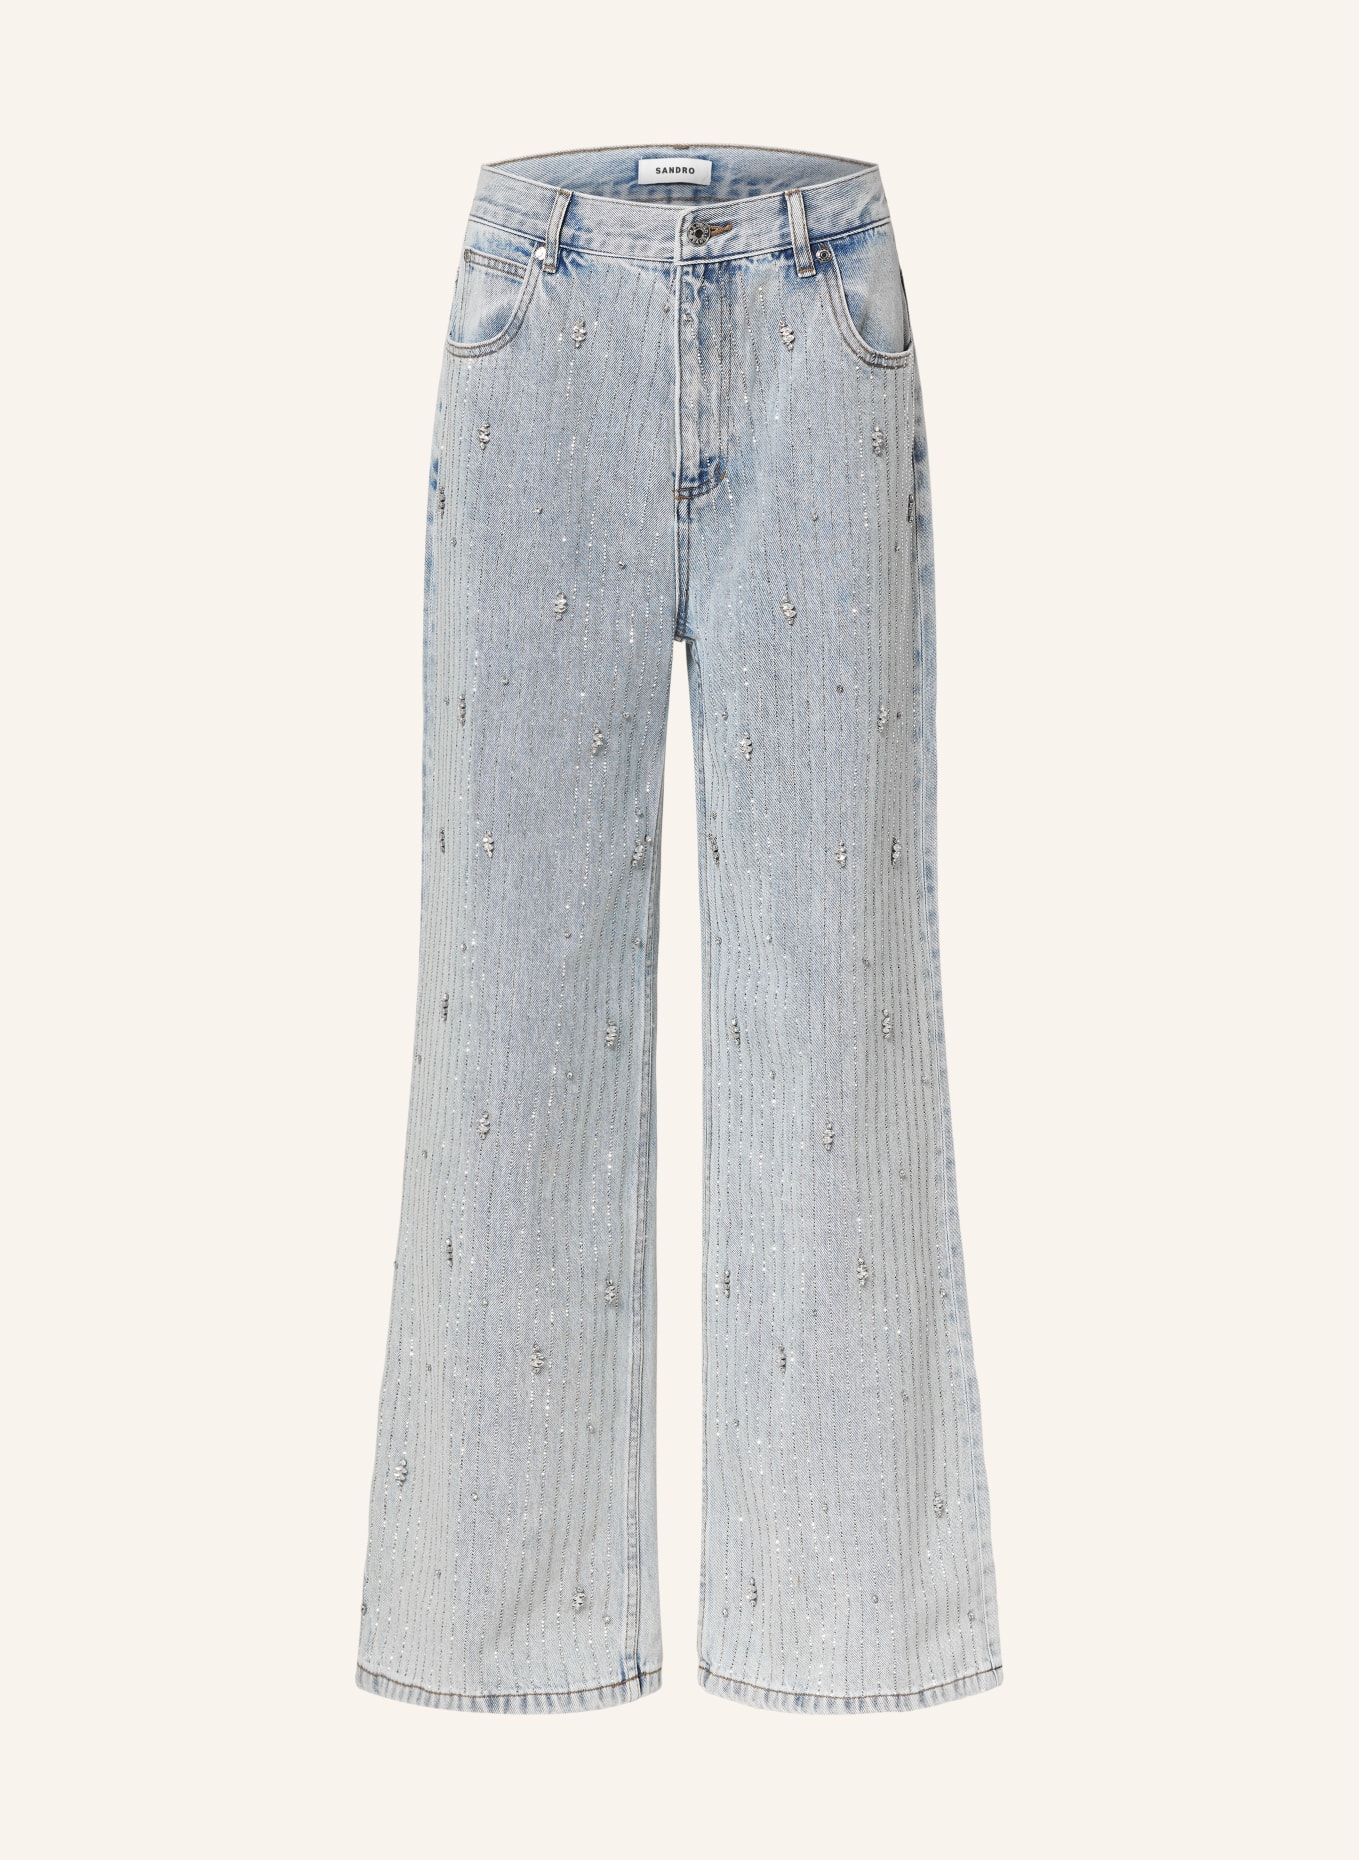 SANDRO Bootcut Jeans mit Schmucksteinen, Farbe: J002 LIGHT BU JEAN (Bild 1)